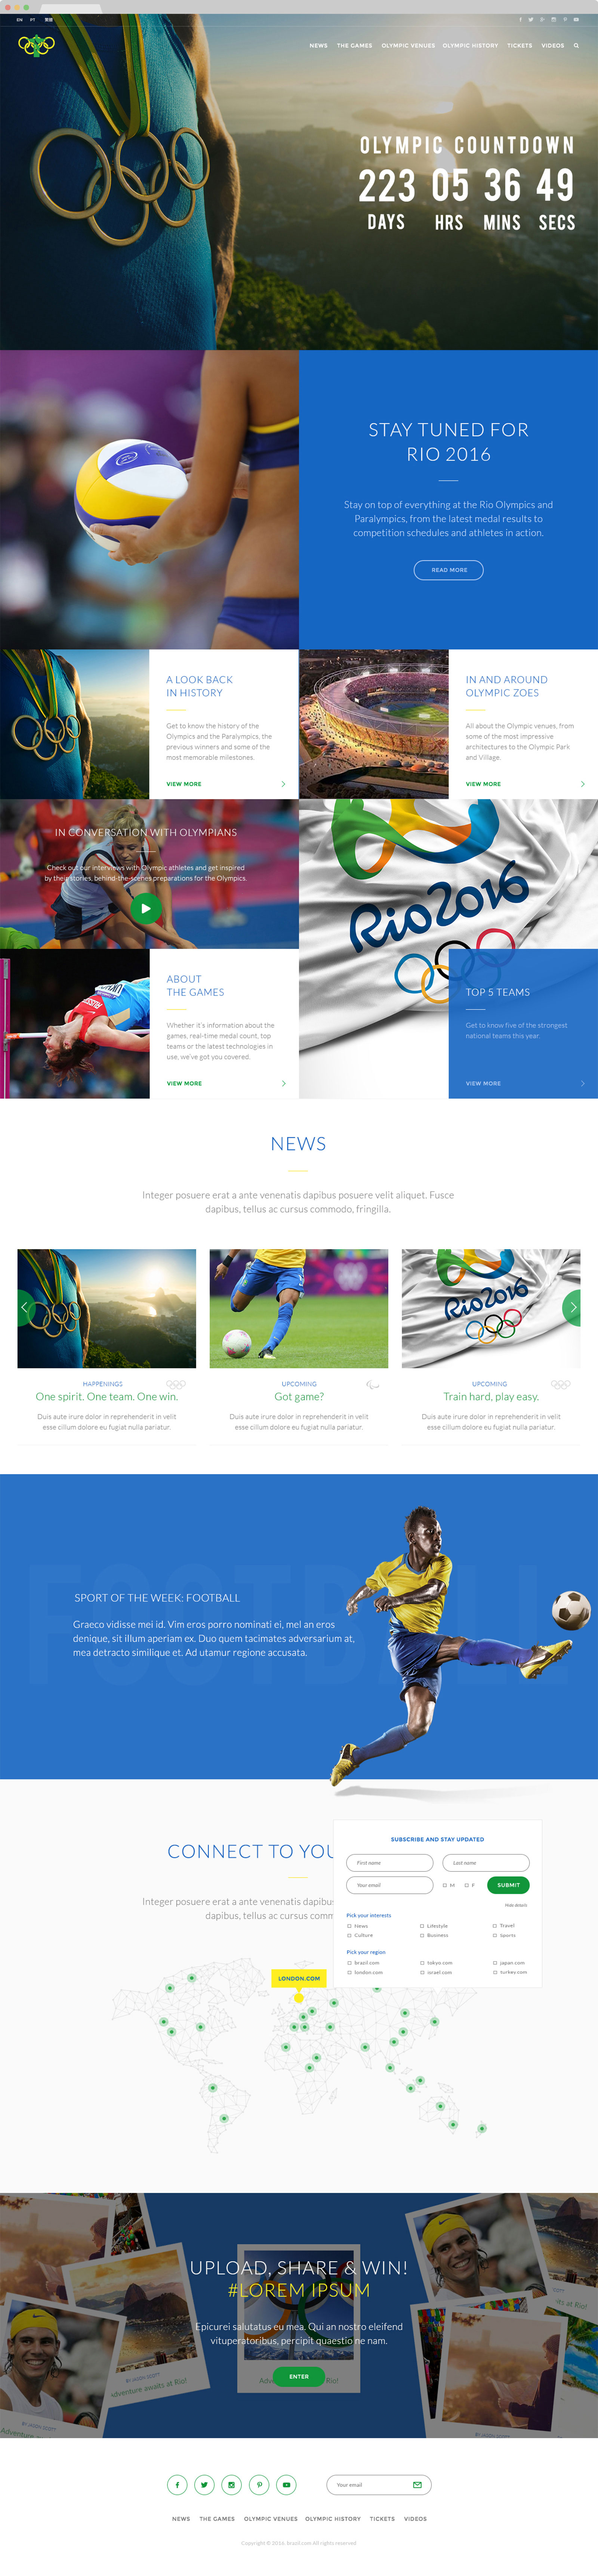 web design singapore brazil 01 - Brazil.com Olympics